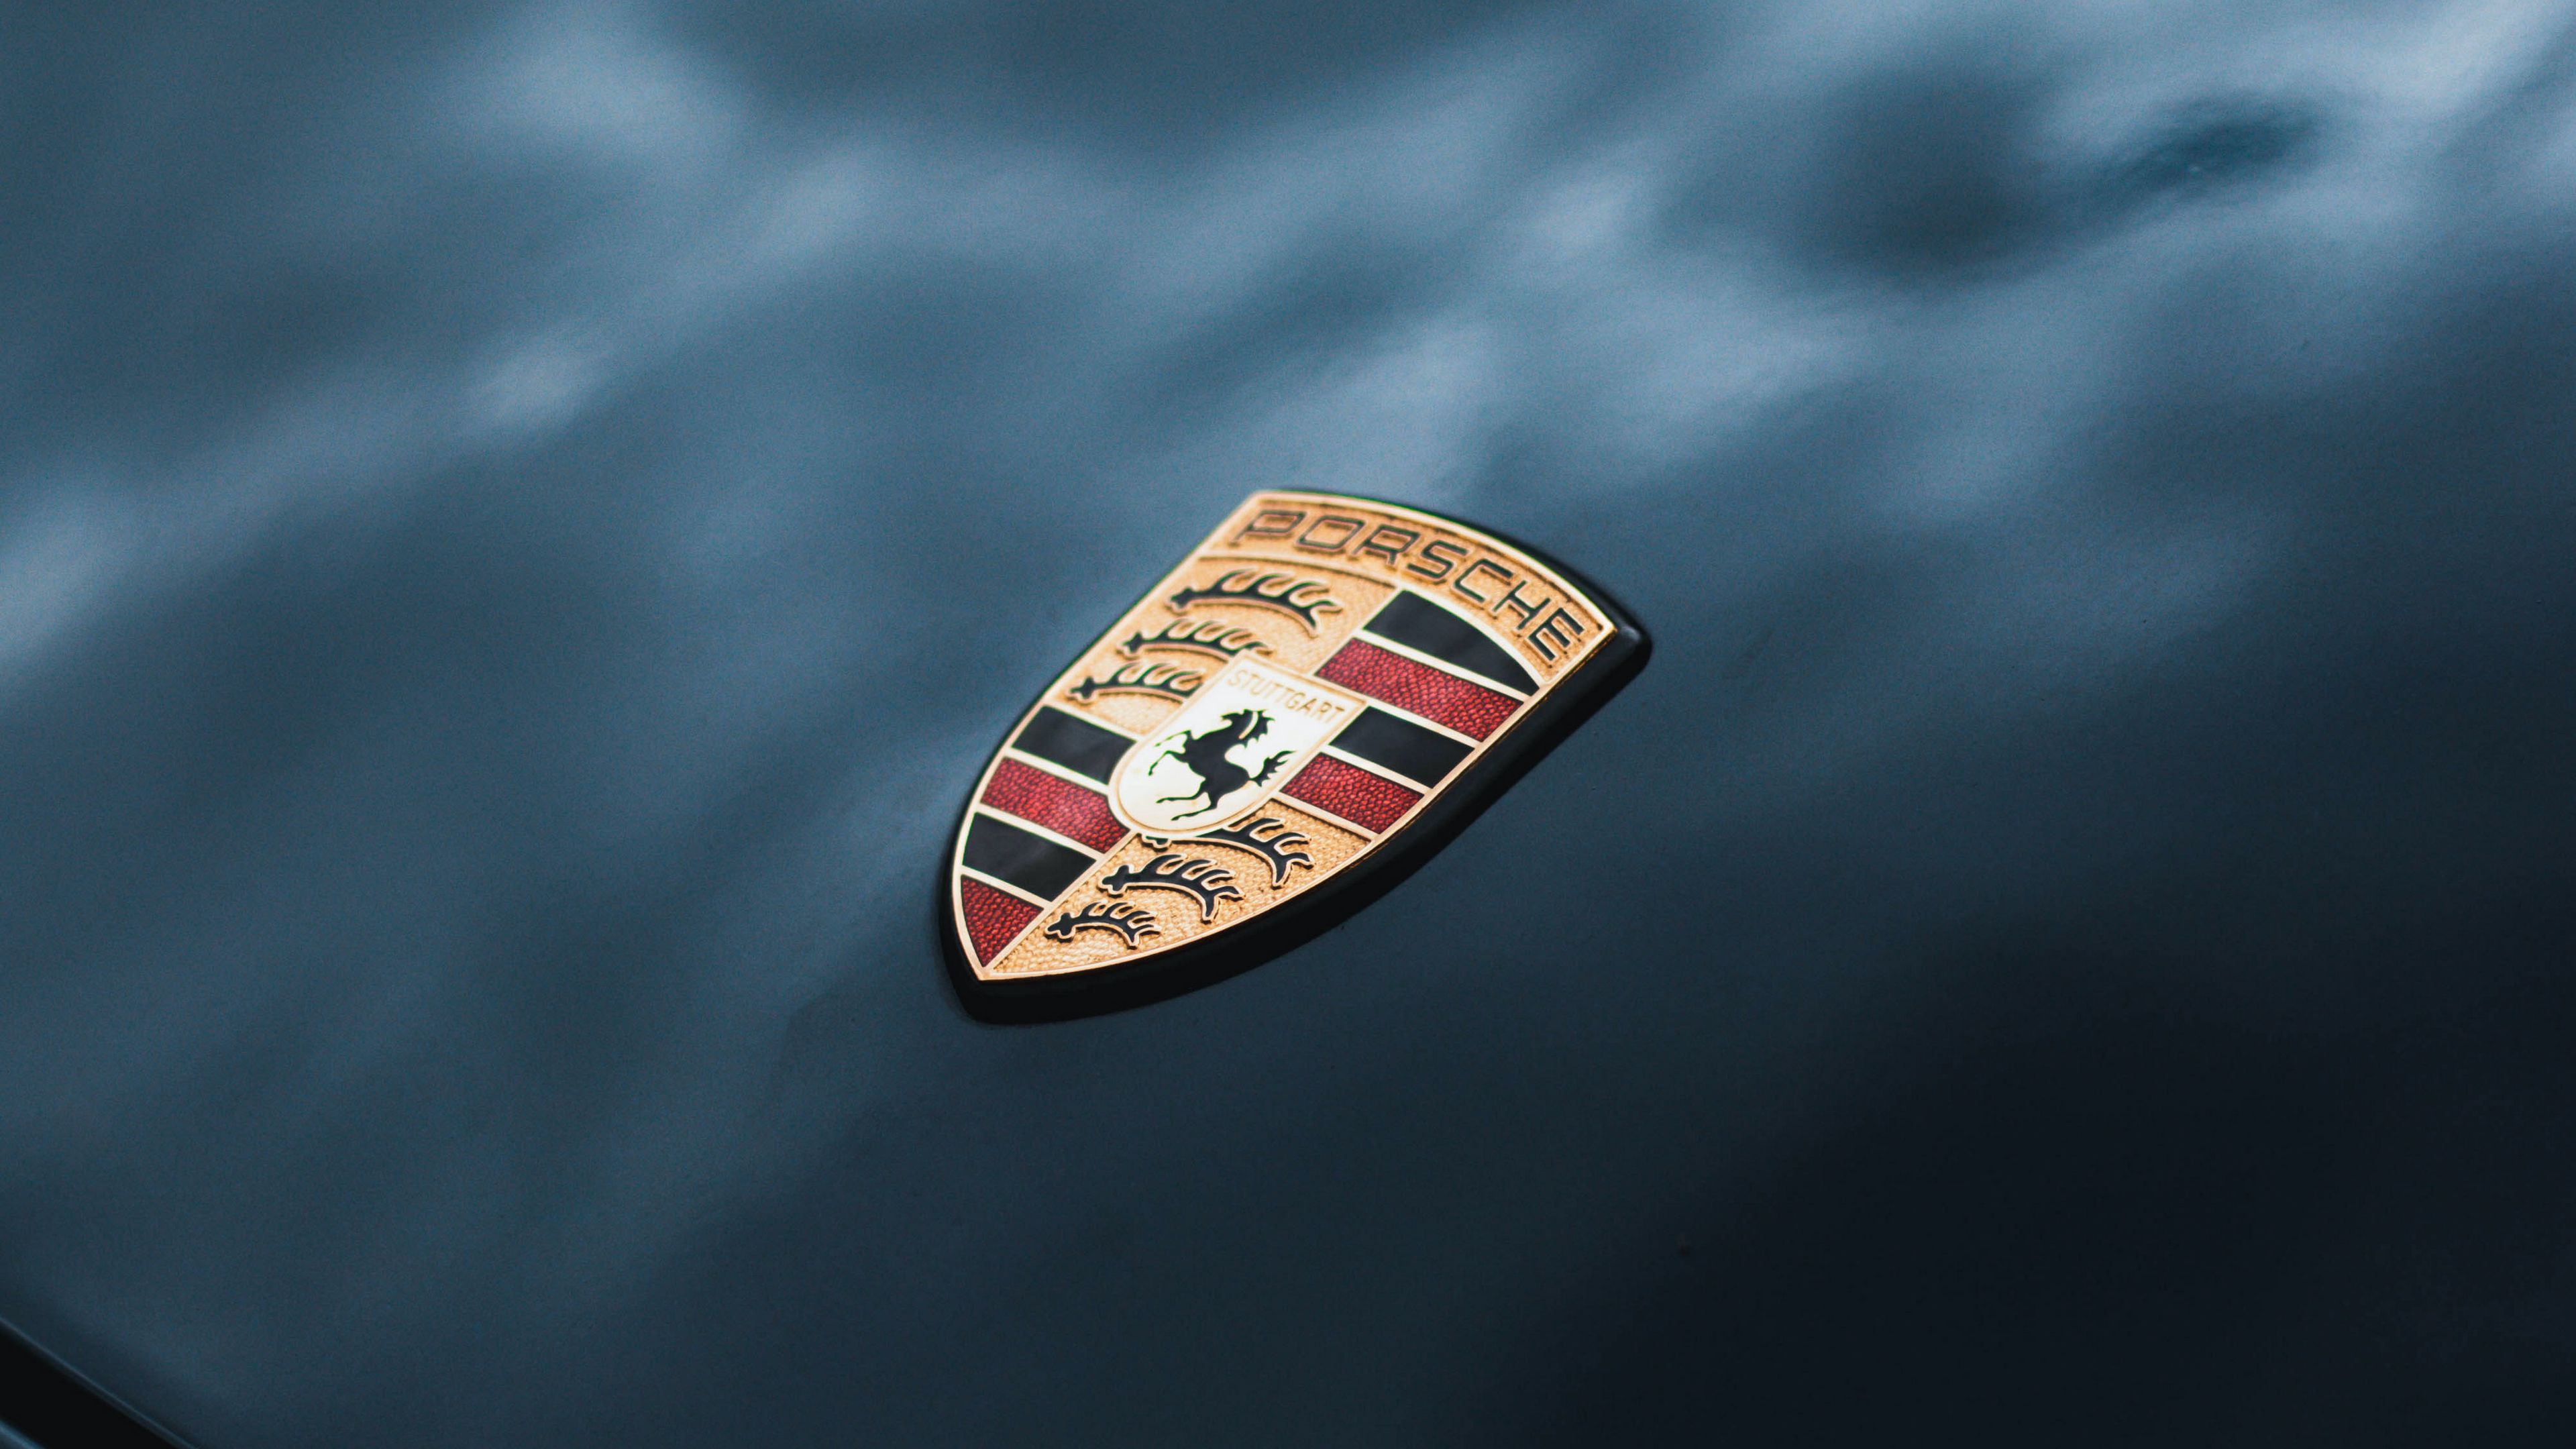 No Reserve Illuminated Porsche Crest | PCARMARKET